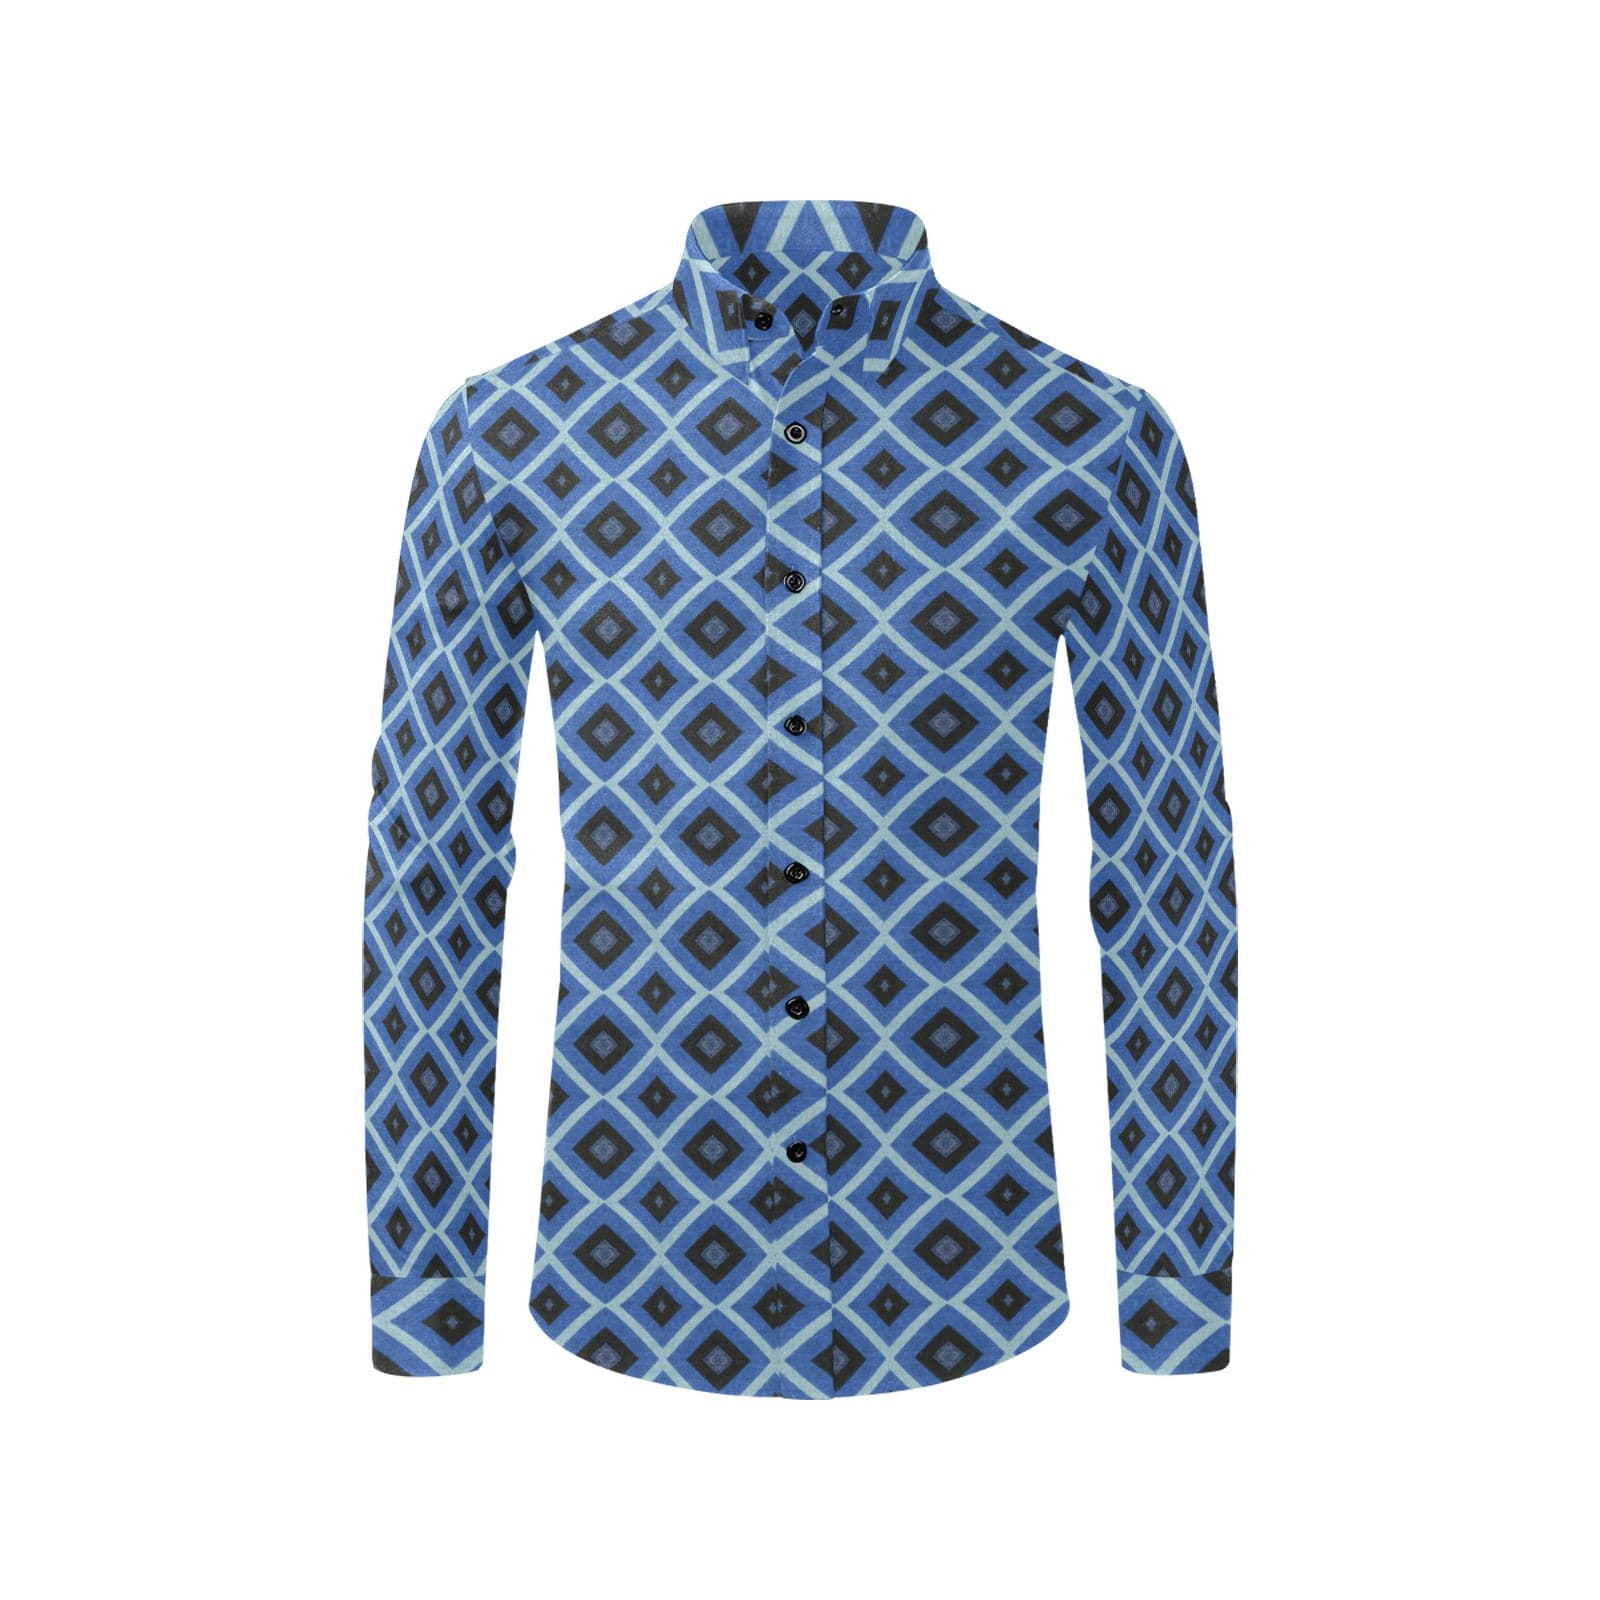 Gennosuke Inspired Black and Blue Patterned Men's Long Sleeve Shirt